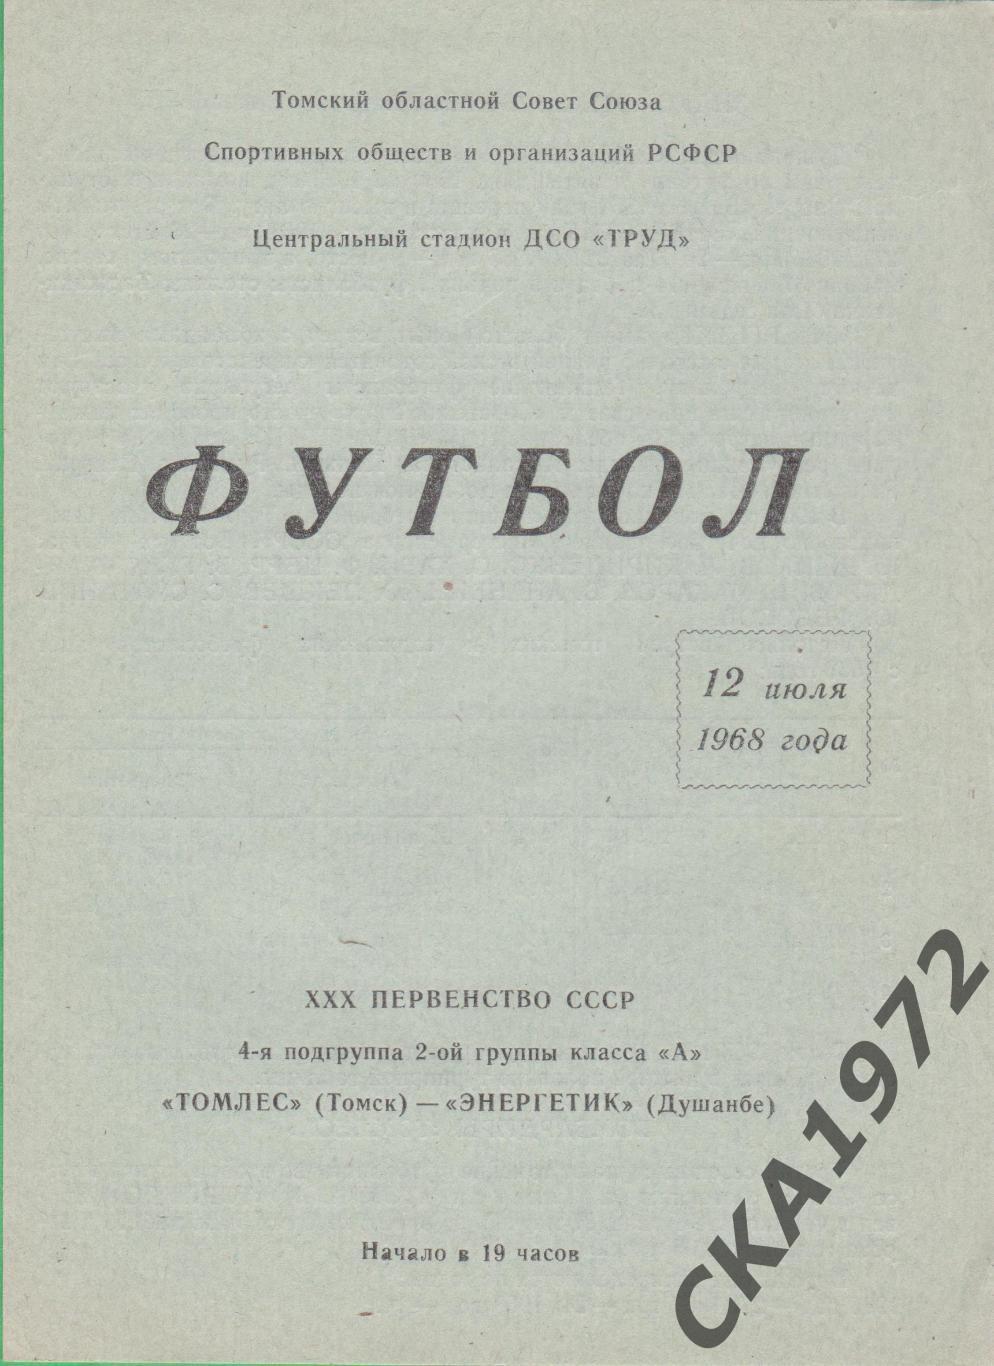 программа Томлес Томск - Энергетик Душанбе 1968